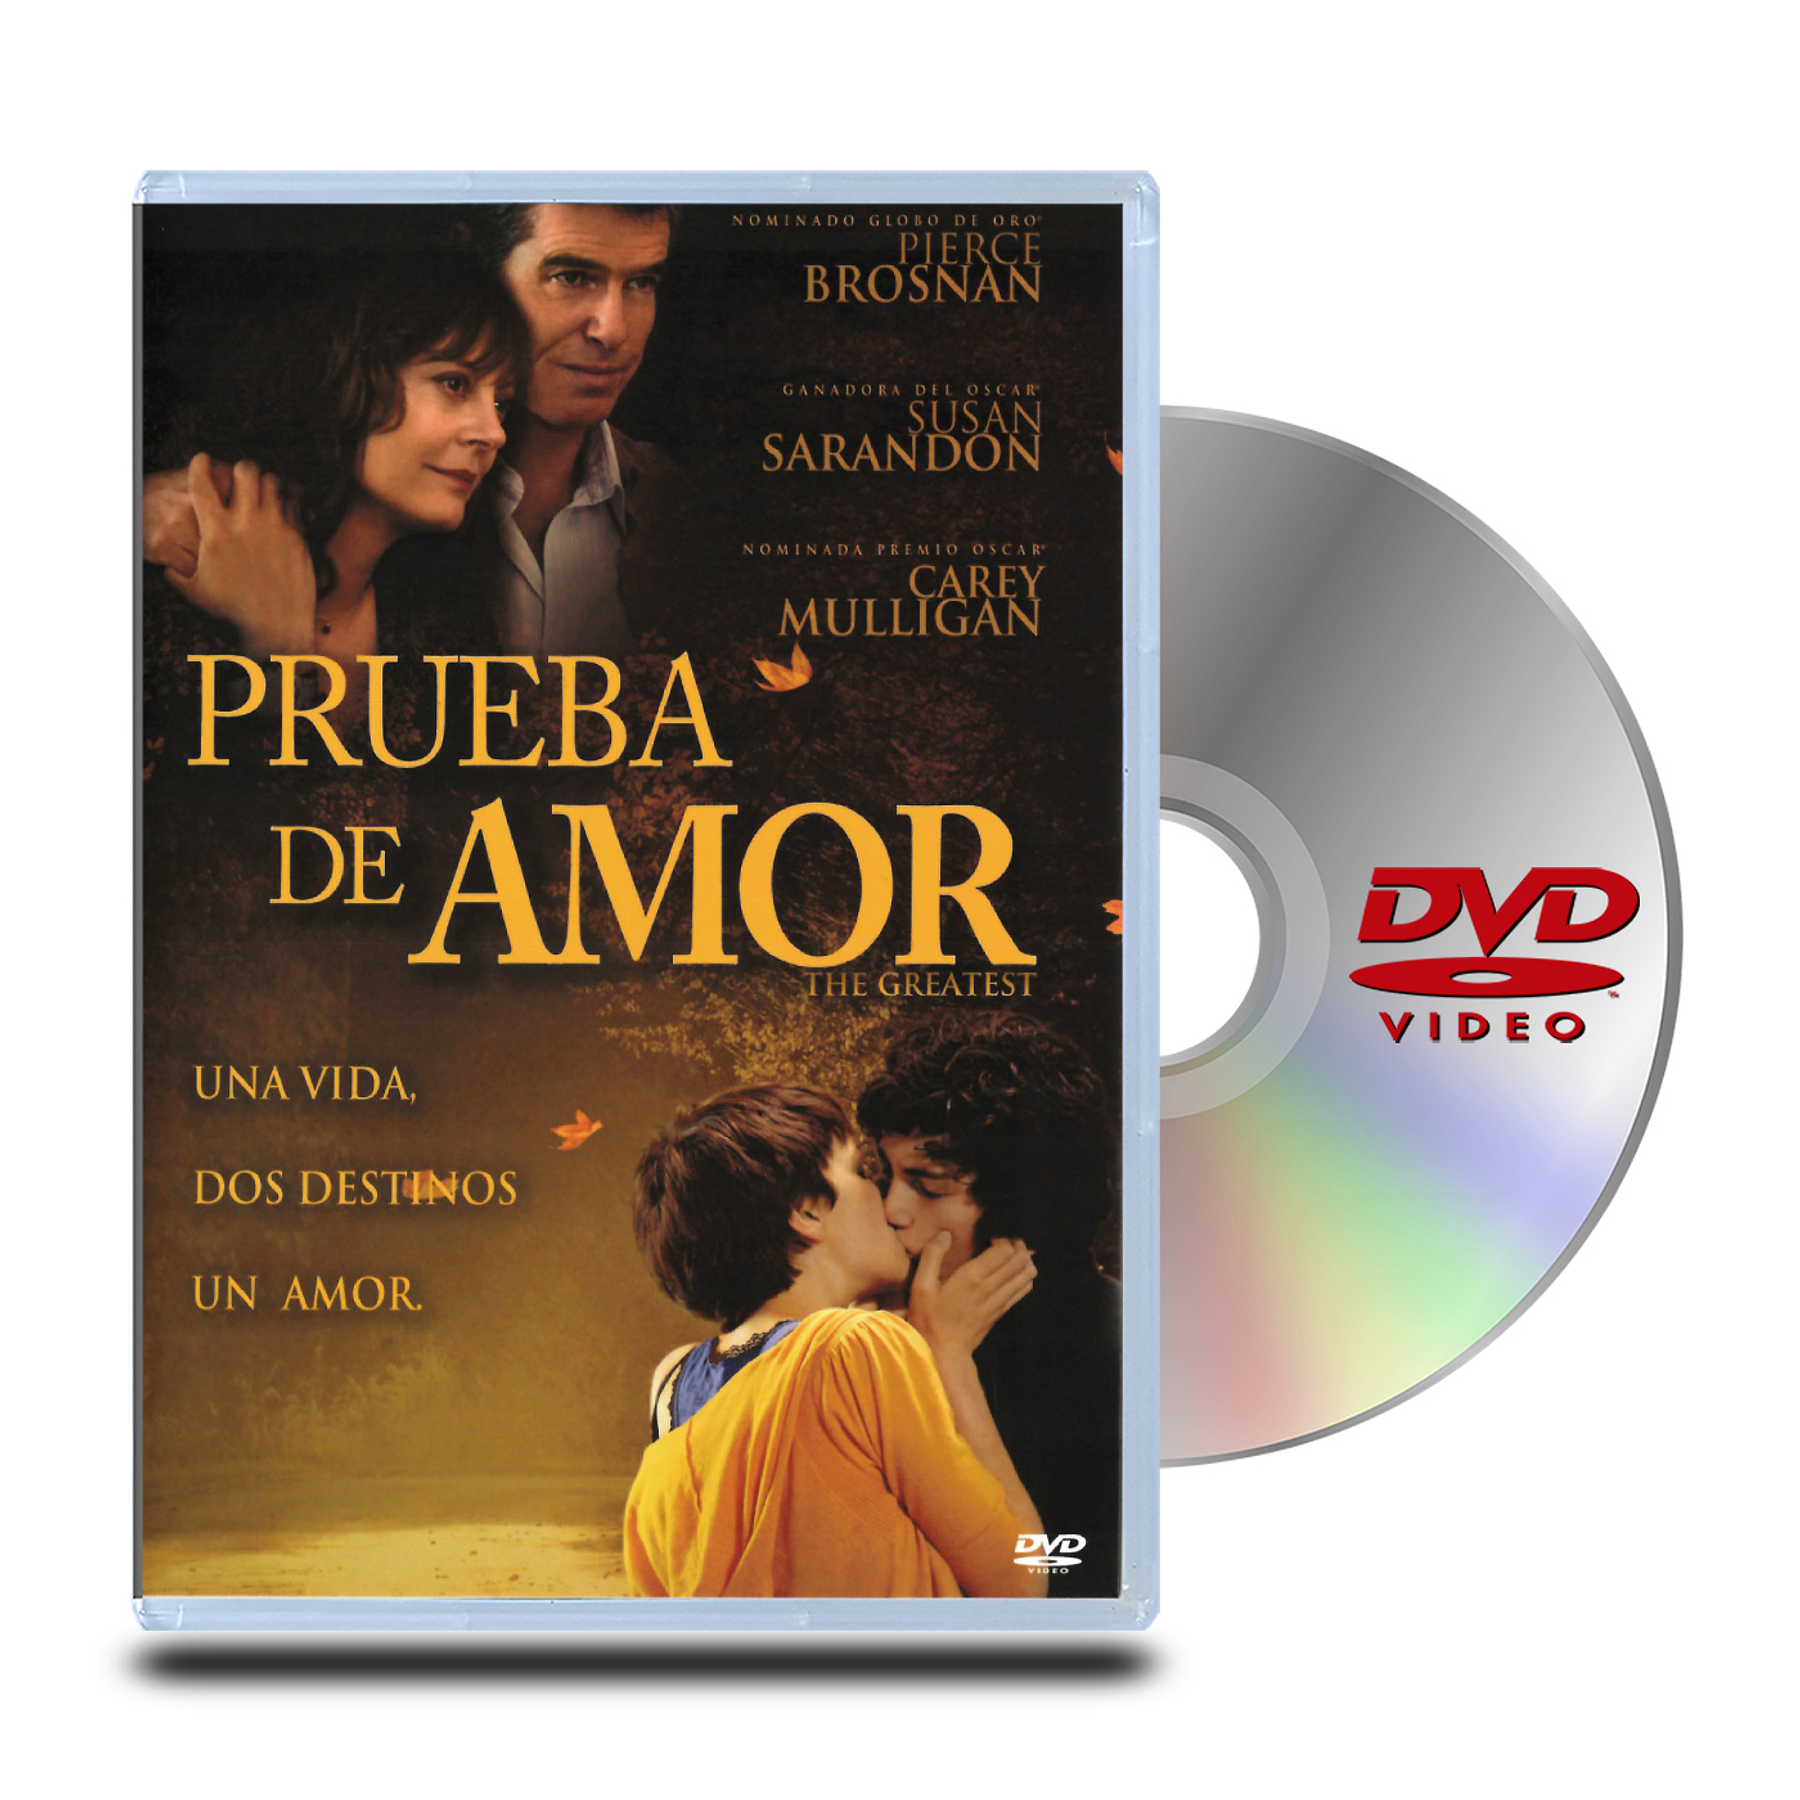 DVD PRUEBA DE AMOR